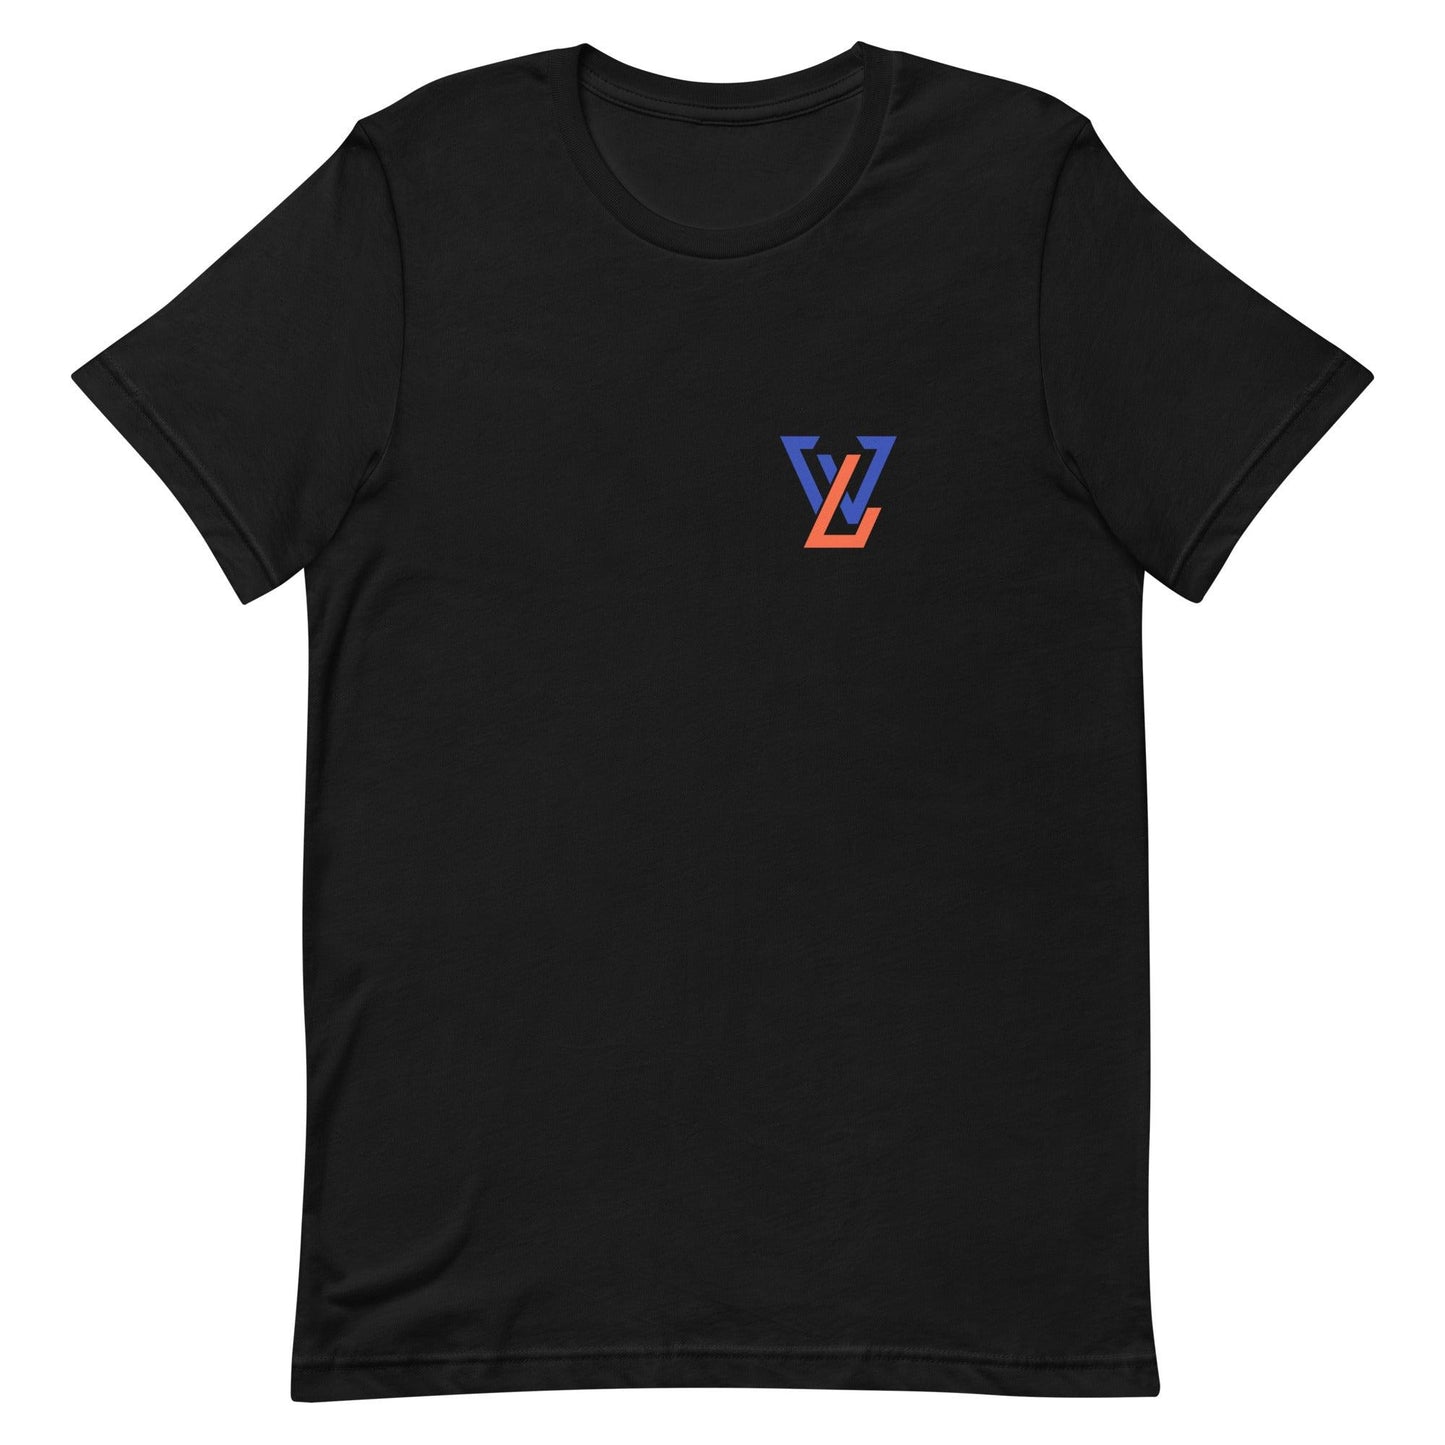 Wyatt Langford “WL” t-shirt - Fan Arch